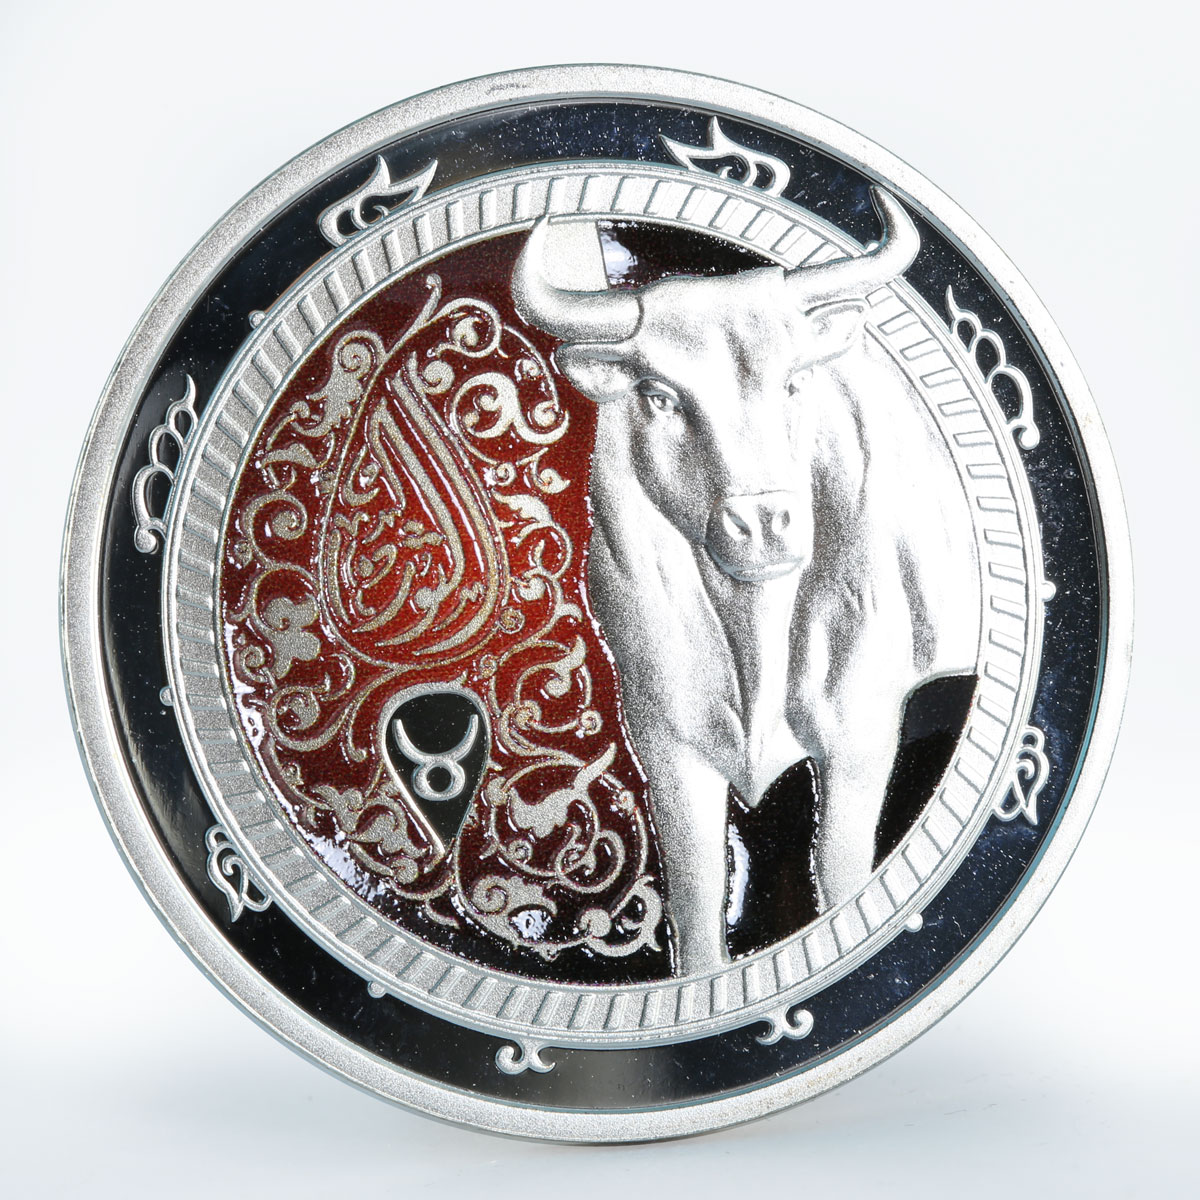 Lebanon 5 livres Zodiac Signs Taurus colored proof silver coin 2013